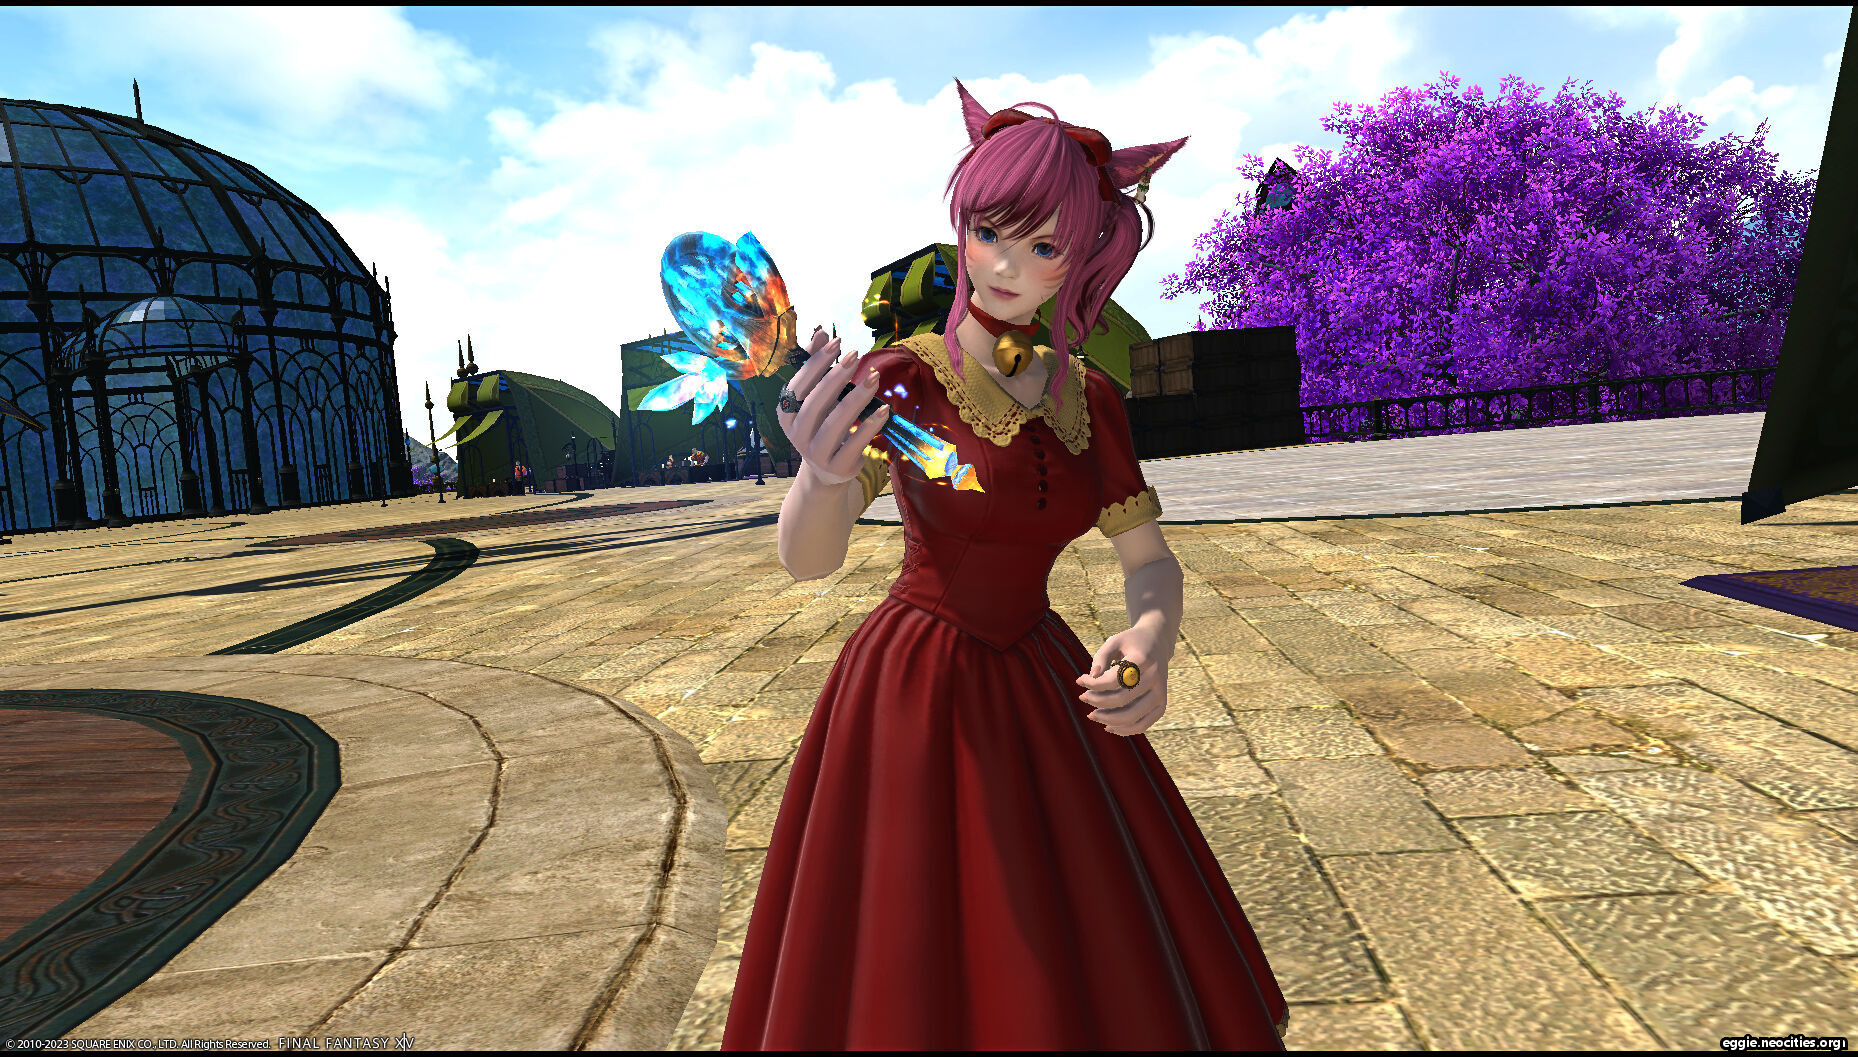 Screenshot of Zel holding her Lodestar Round Knife